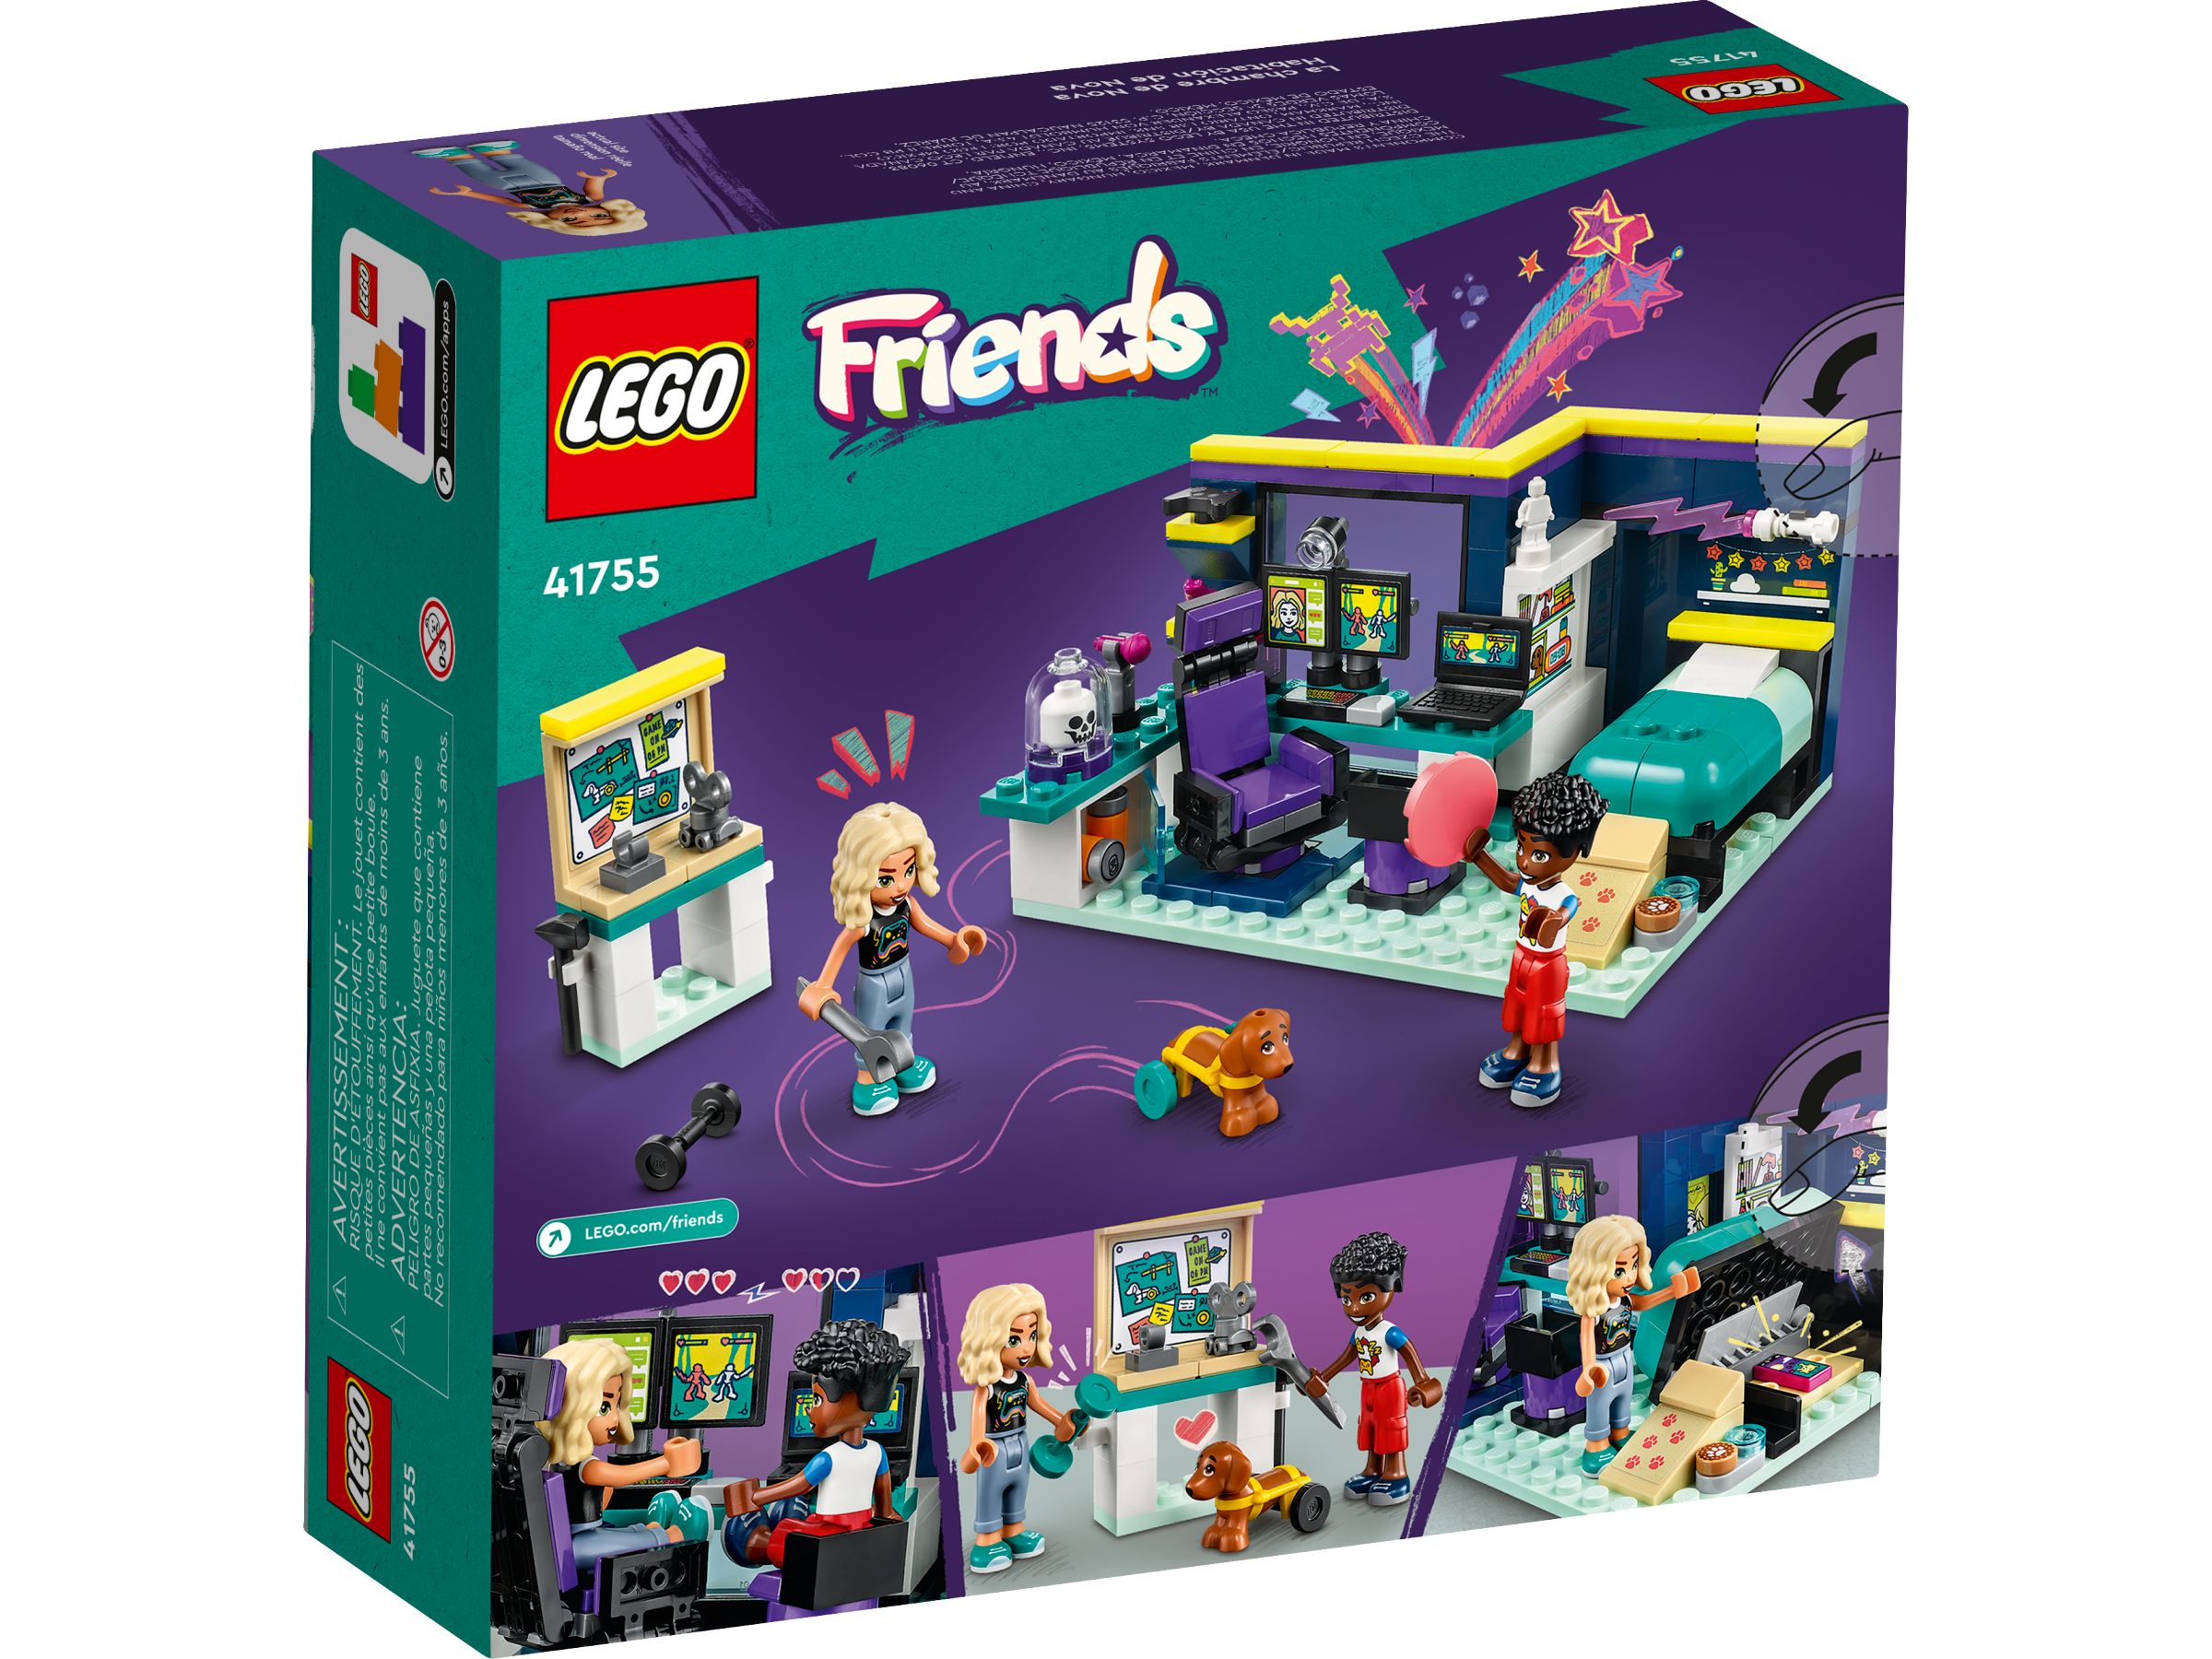 LEGO Friends 41755 Novas Zimmer LEGO_41755_alt5.jpg